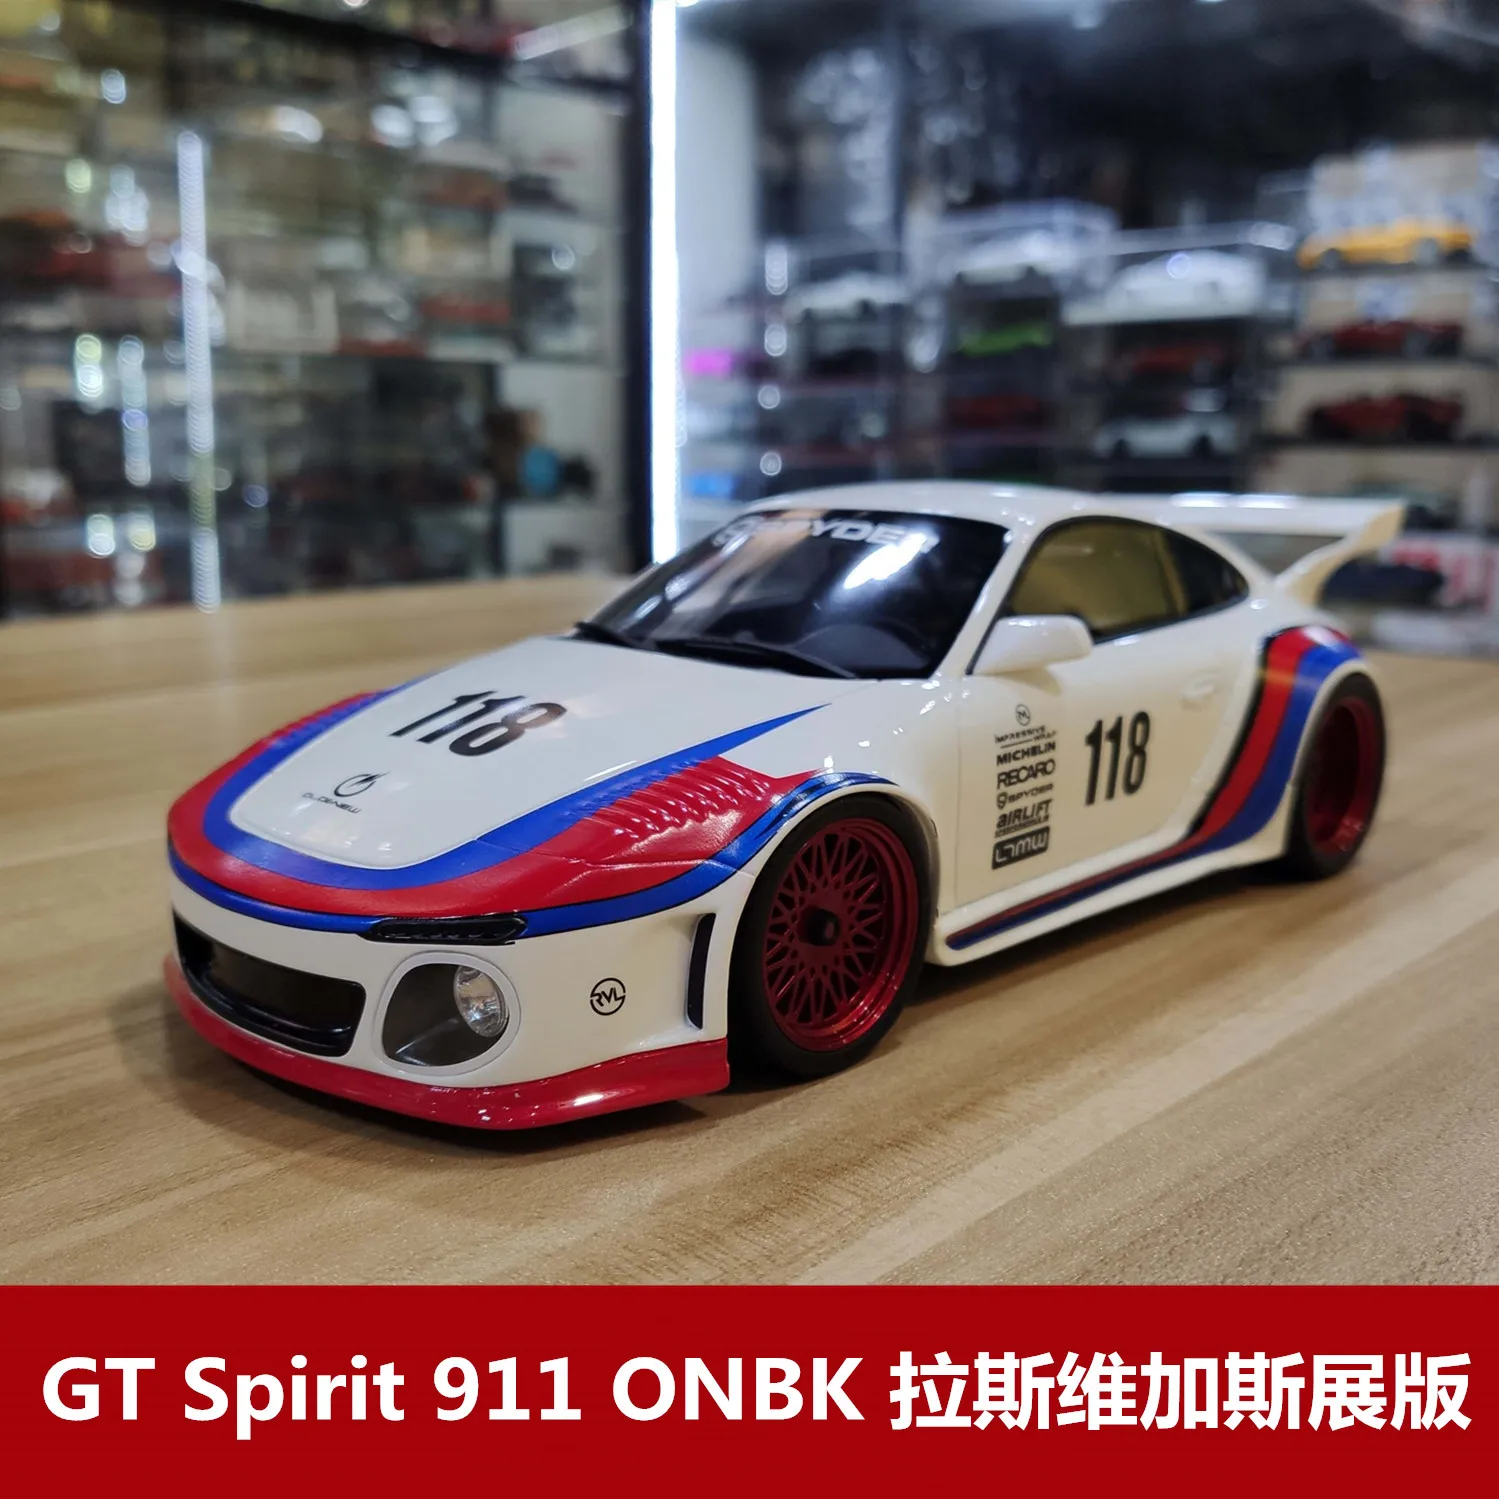 

GT Spirit cars 1:18 Porsche 911 ONBK Las Vegas Edition #118 Limited edition simulation resin vehicle model